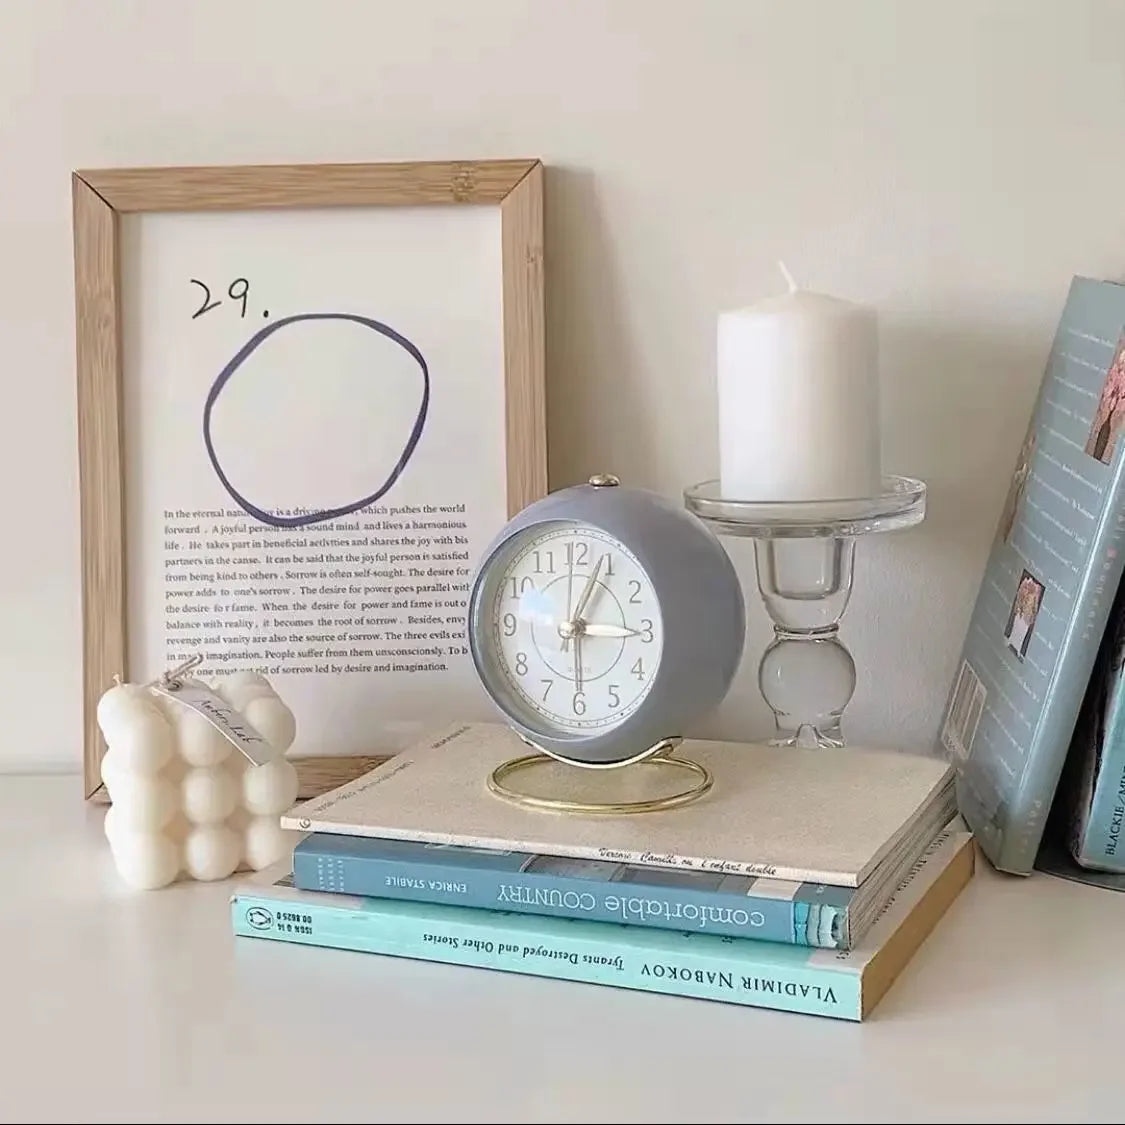 Light Alarm Clock with Night Light Silent for Bedroom Decoration Small Quartz